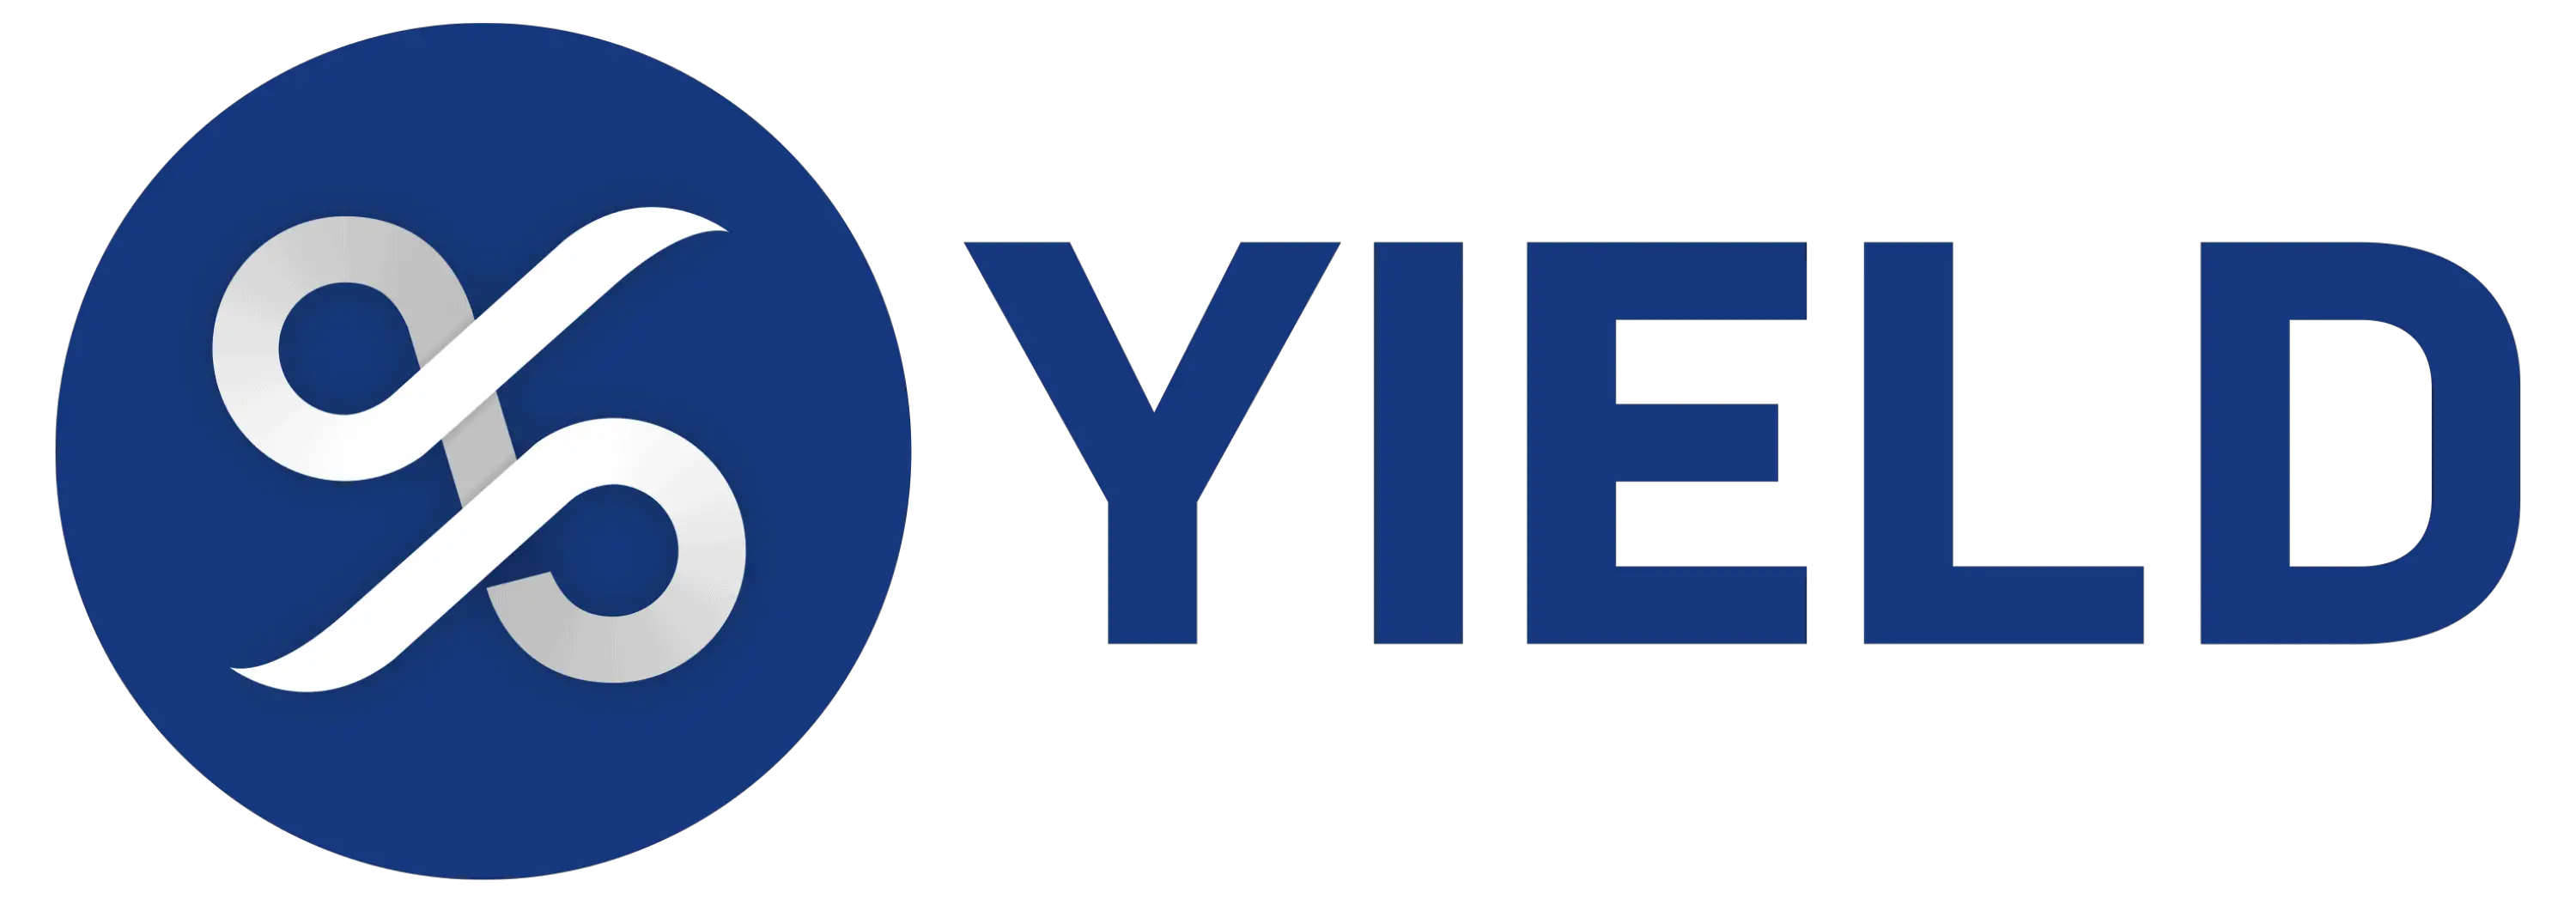 Yield App Logo